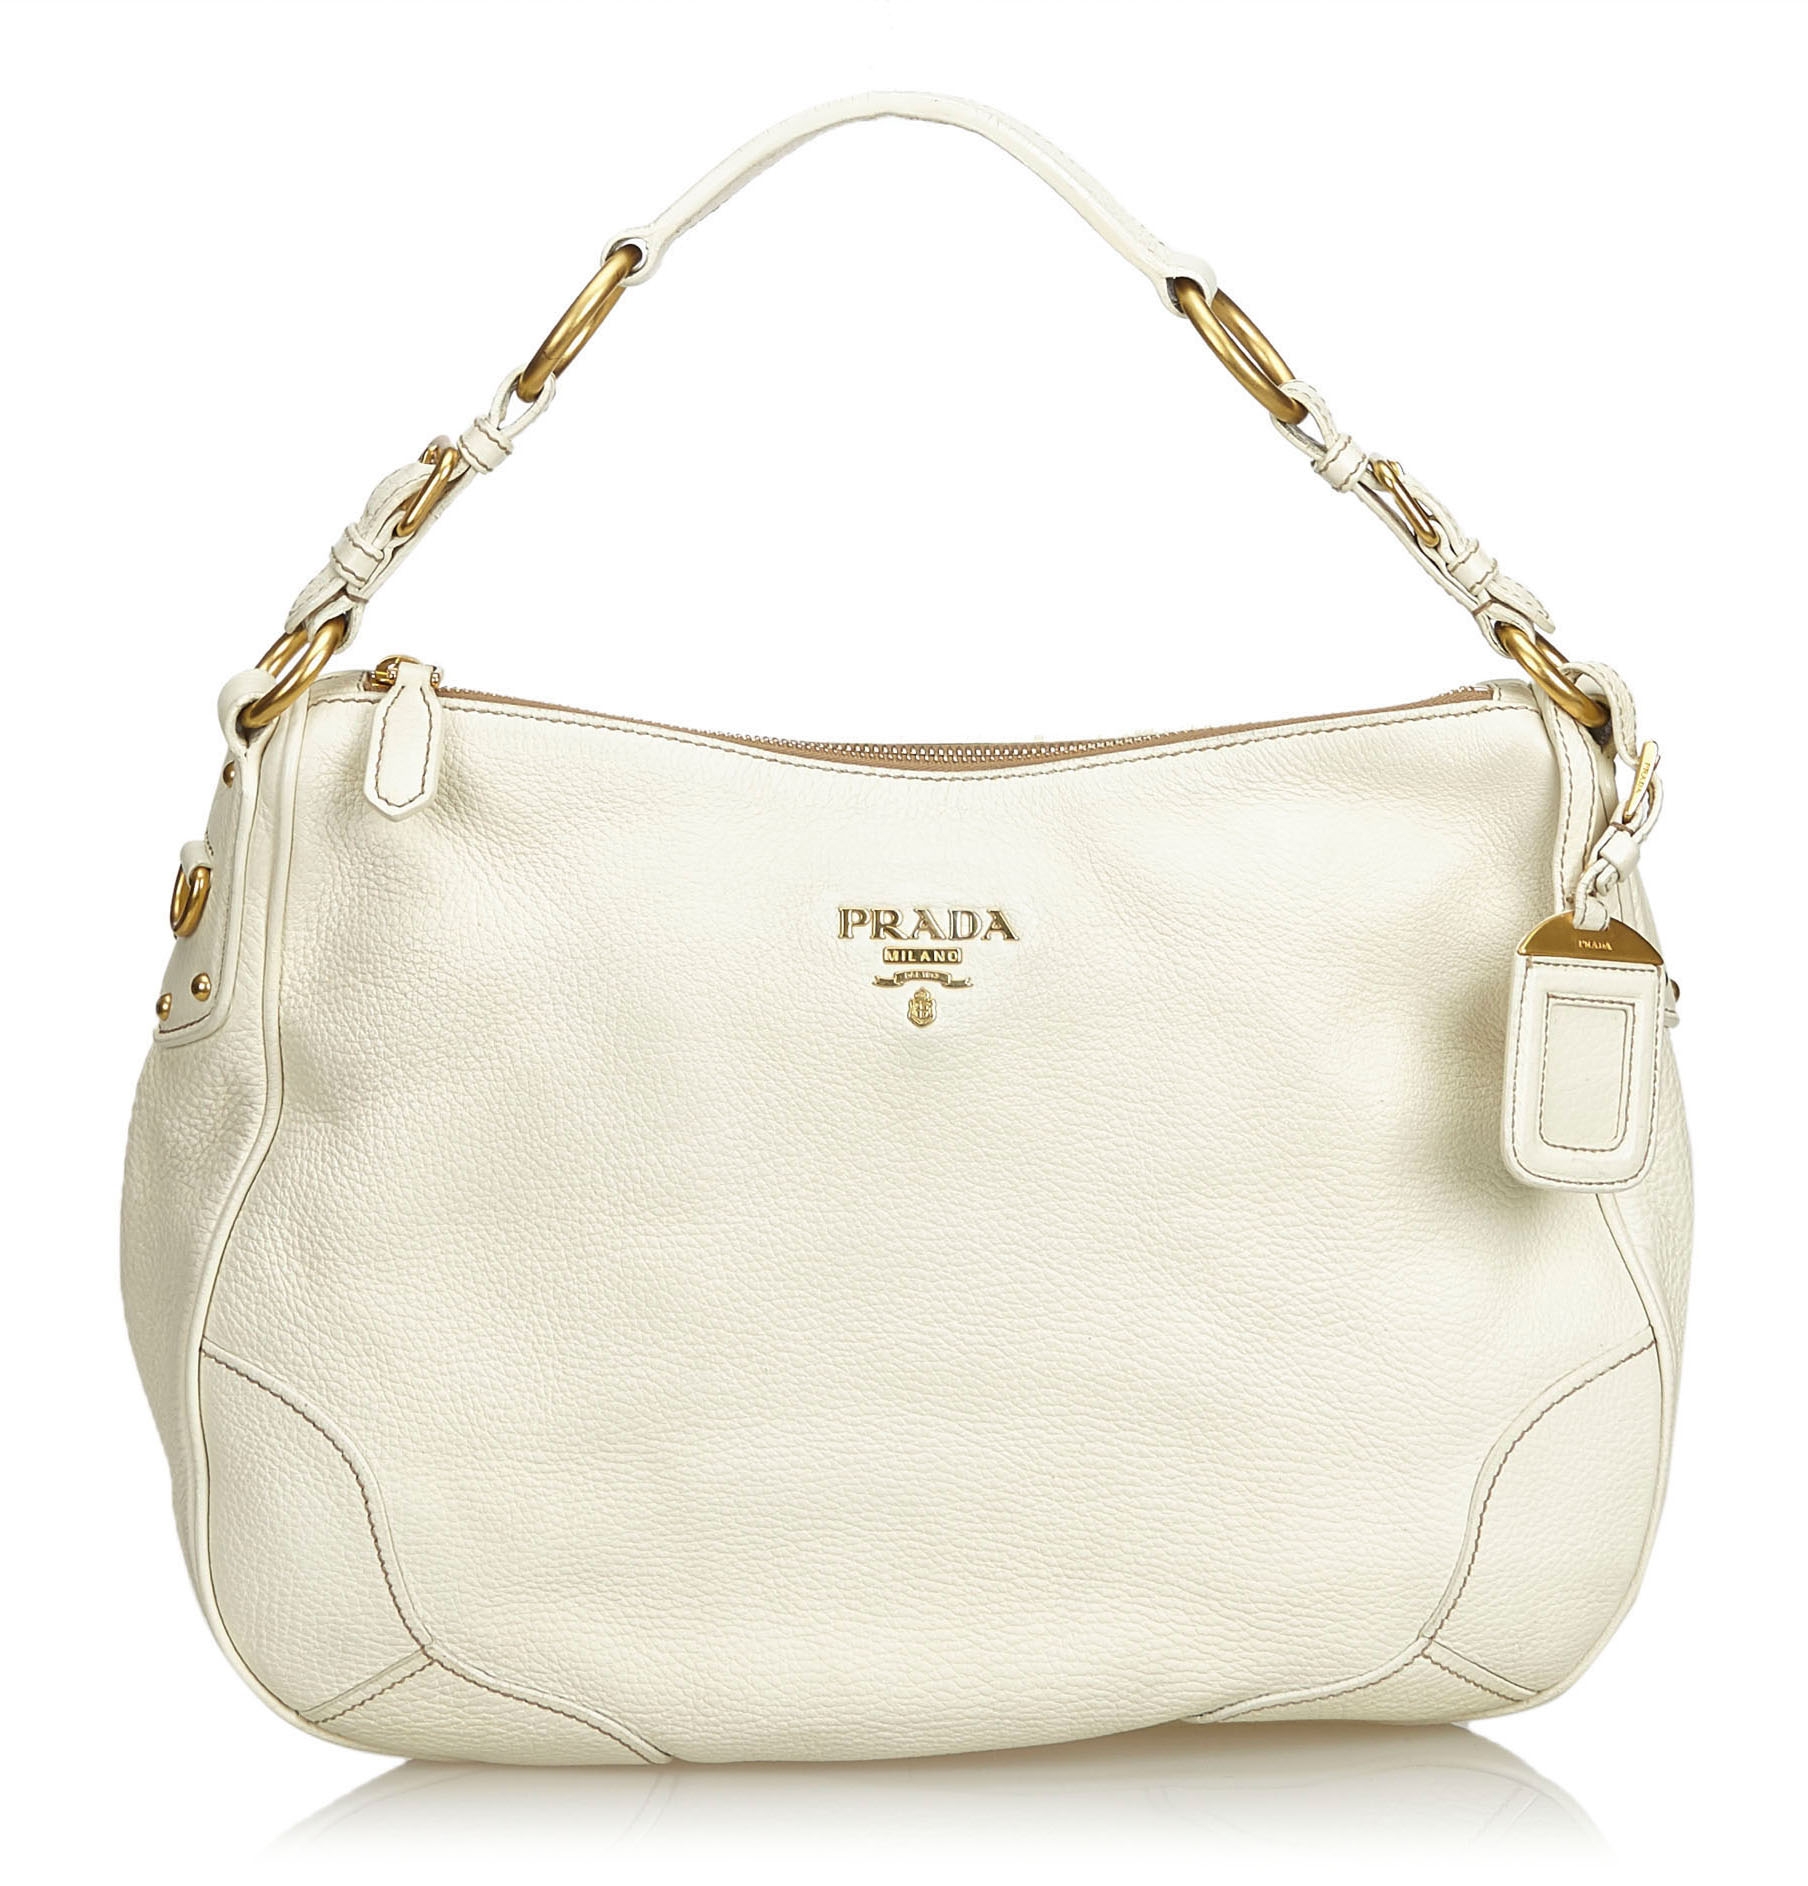 prada purse white